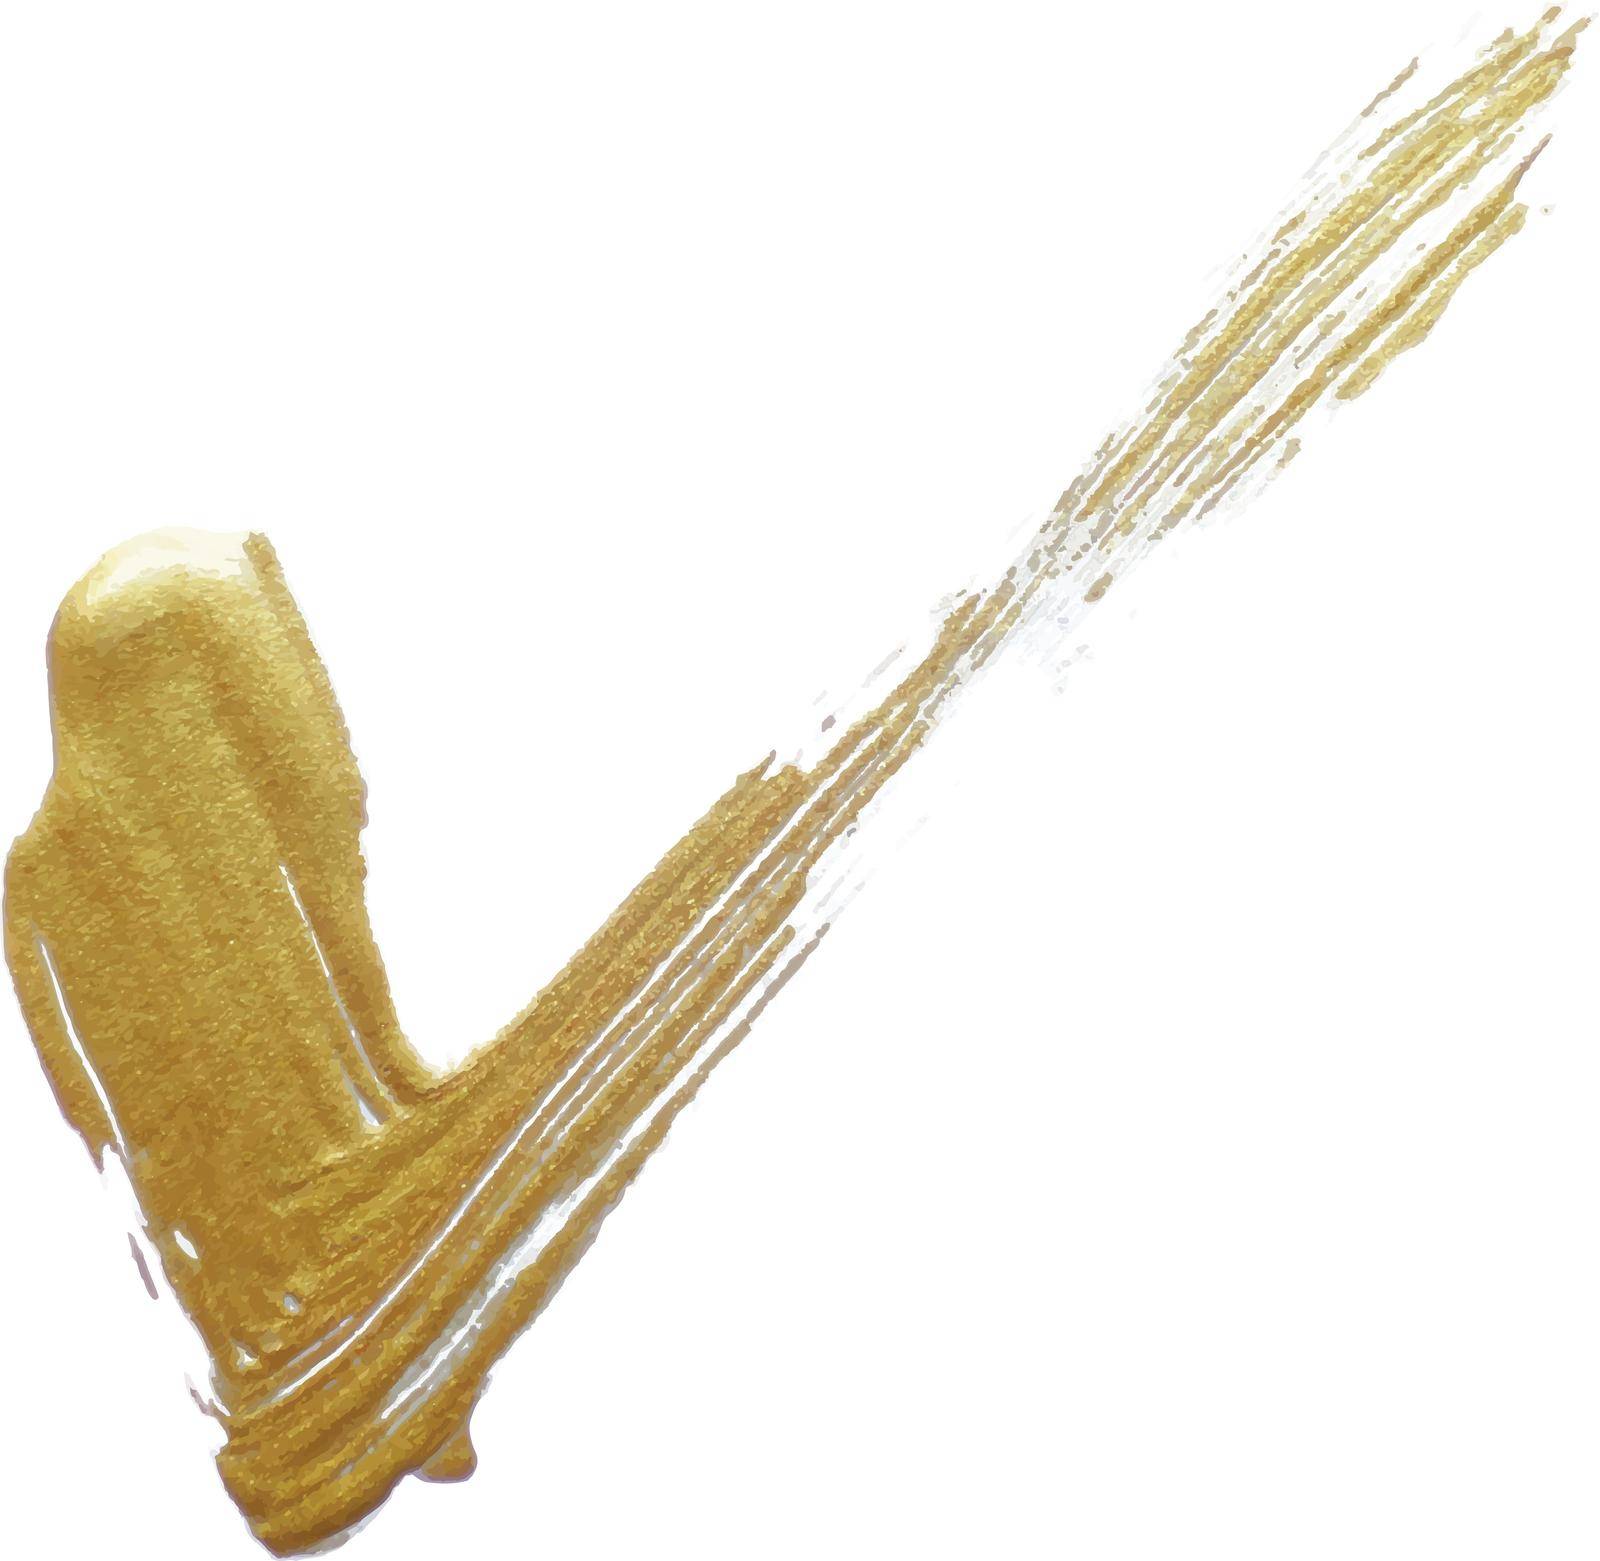 Realistic gold glitter paint brush. by puruan